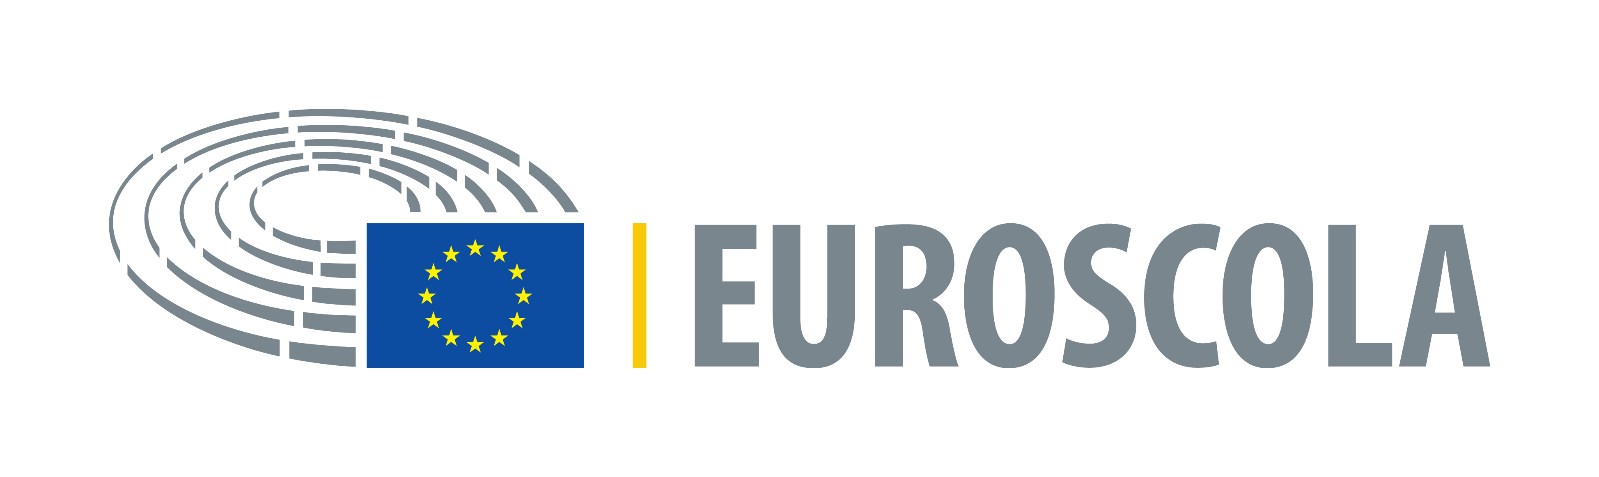 Programme Euroscola